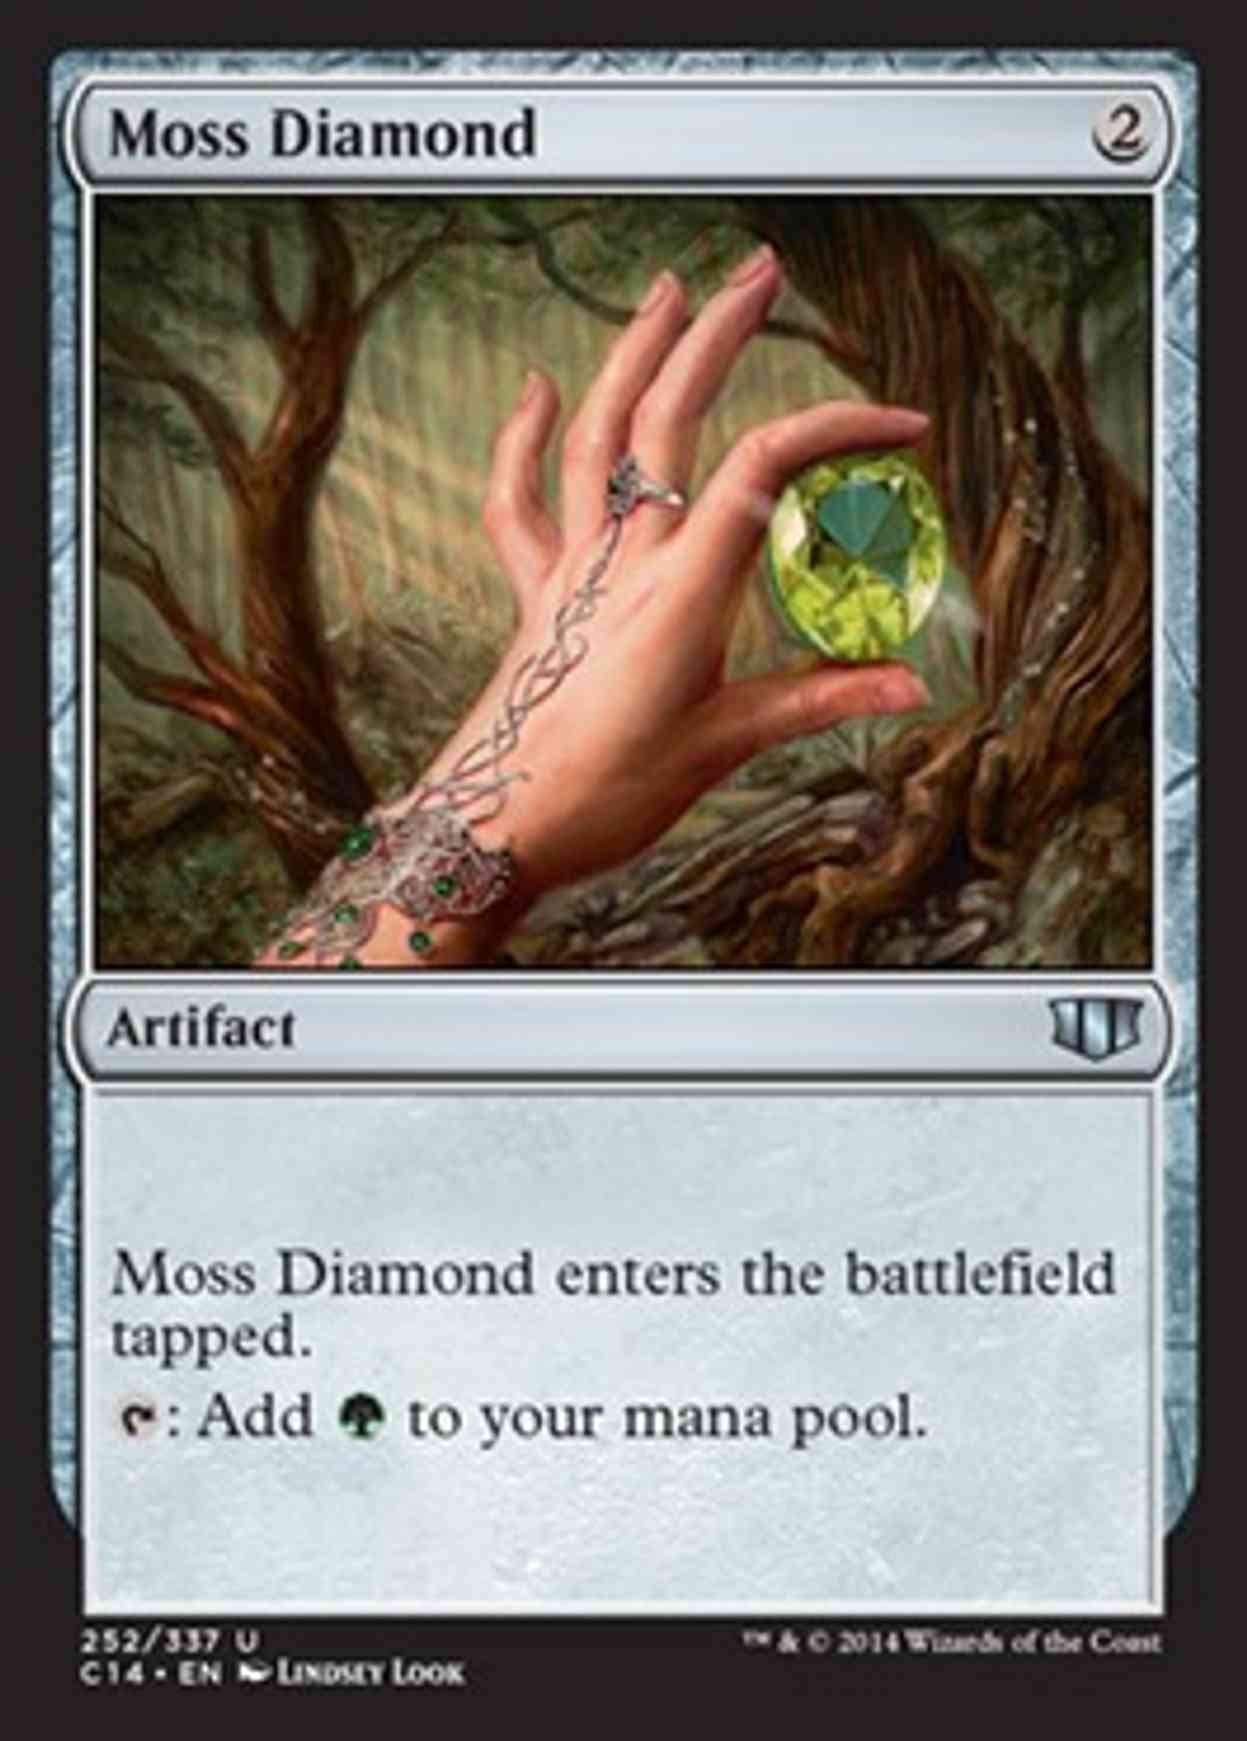 Moss Diamond magic card front